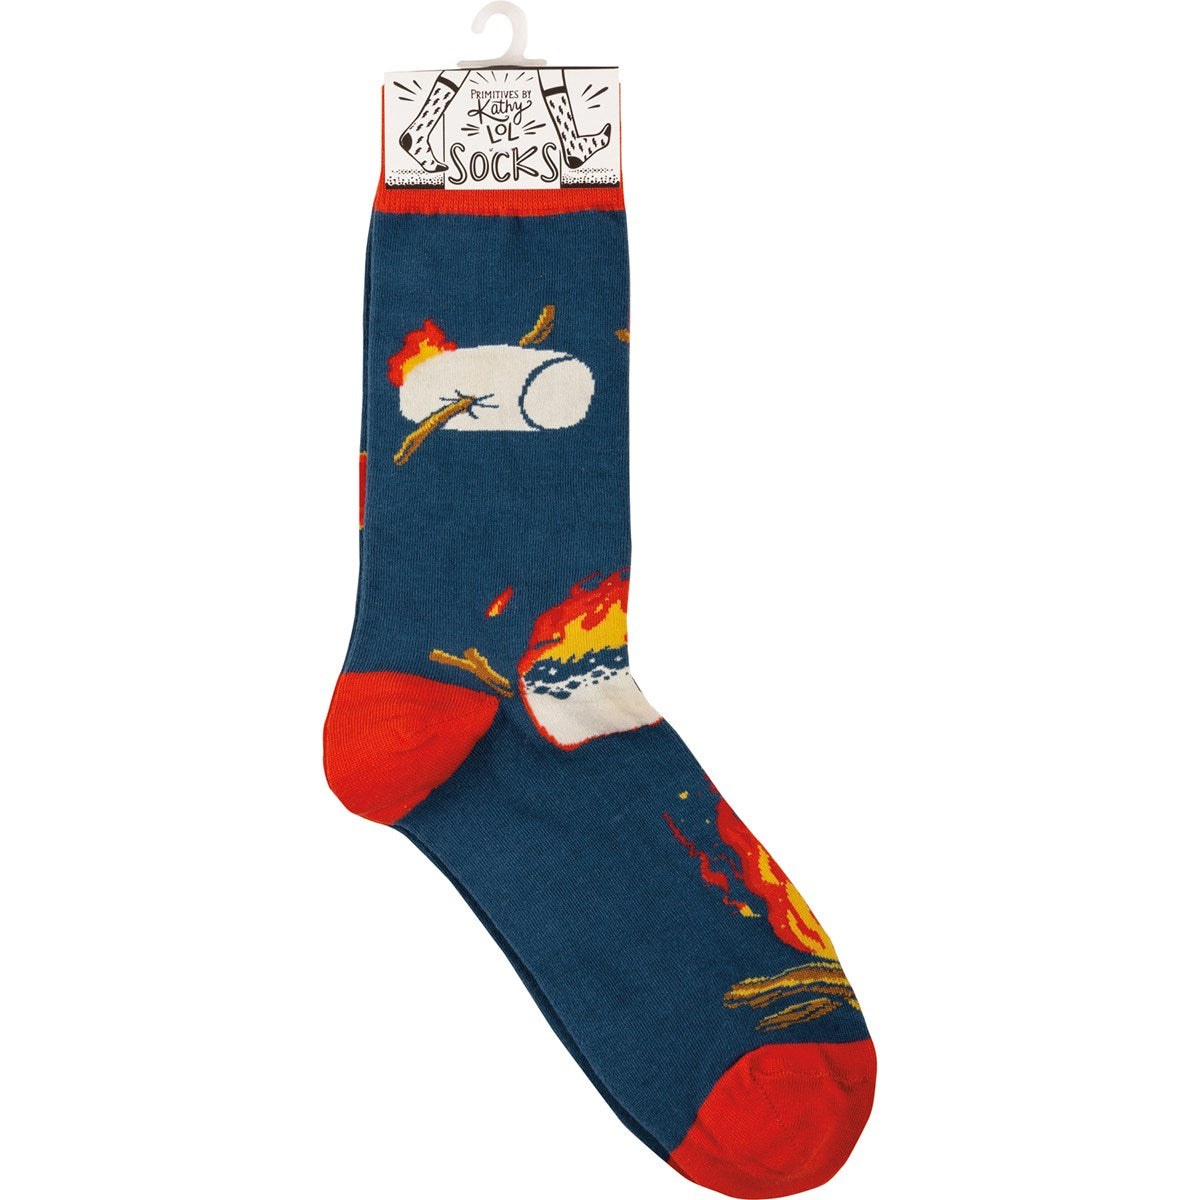 💙 Hot Dogs & Marshmallows Unisex Fun Socks